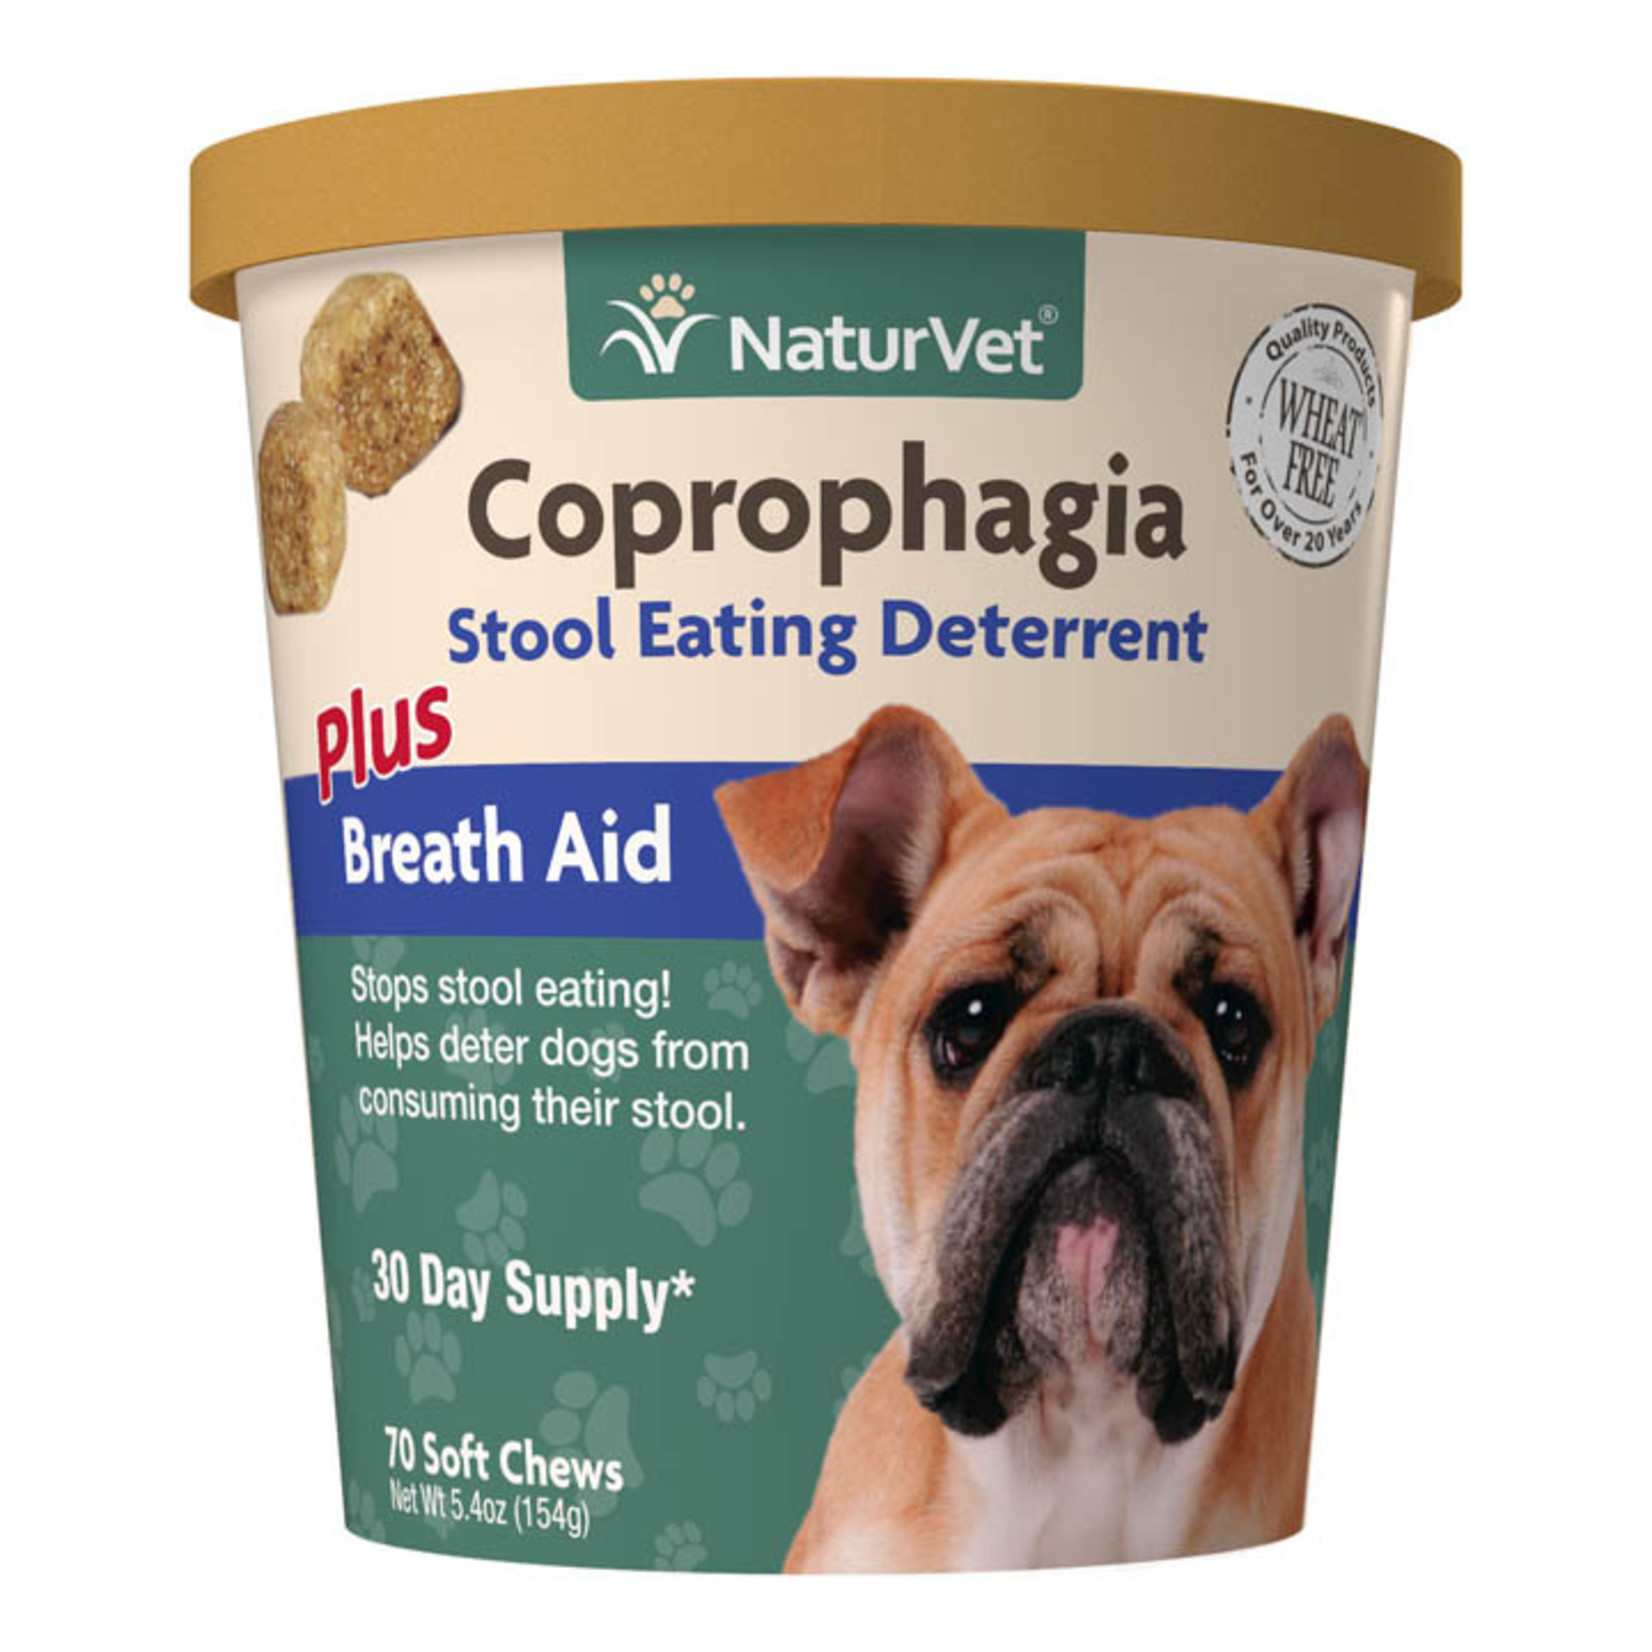 NaturVet NaturVet Coprophagia Stool Eating Deterrent Soft Chews 70ct